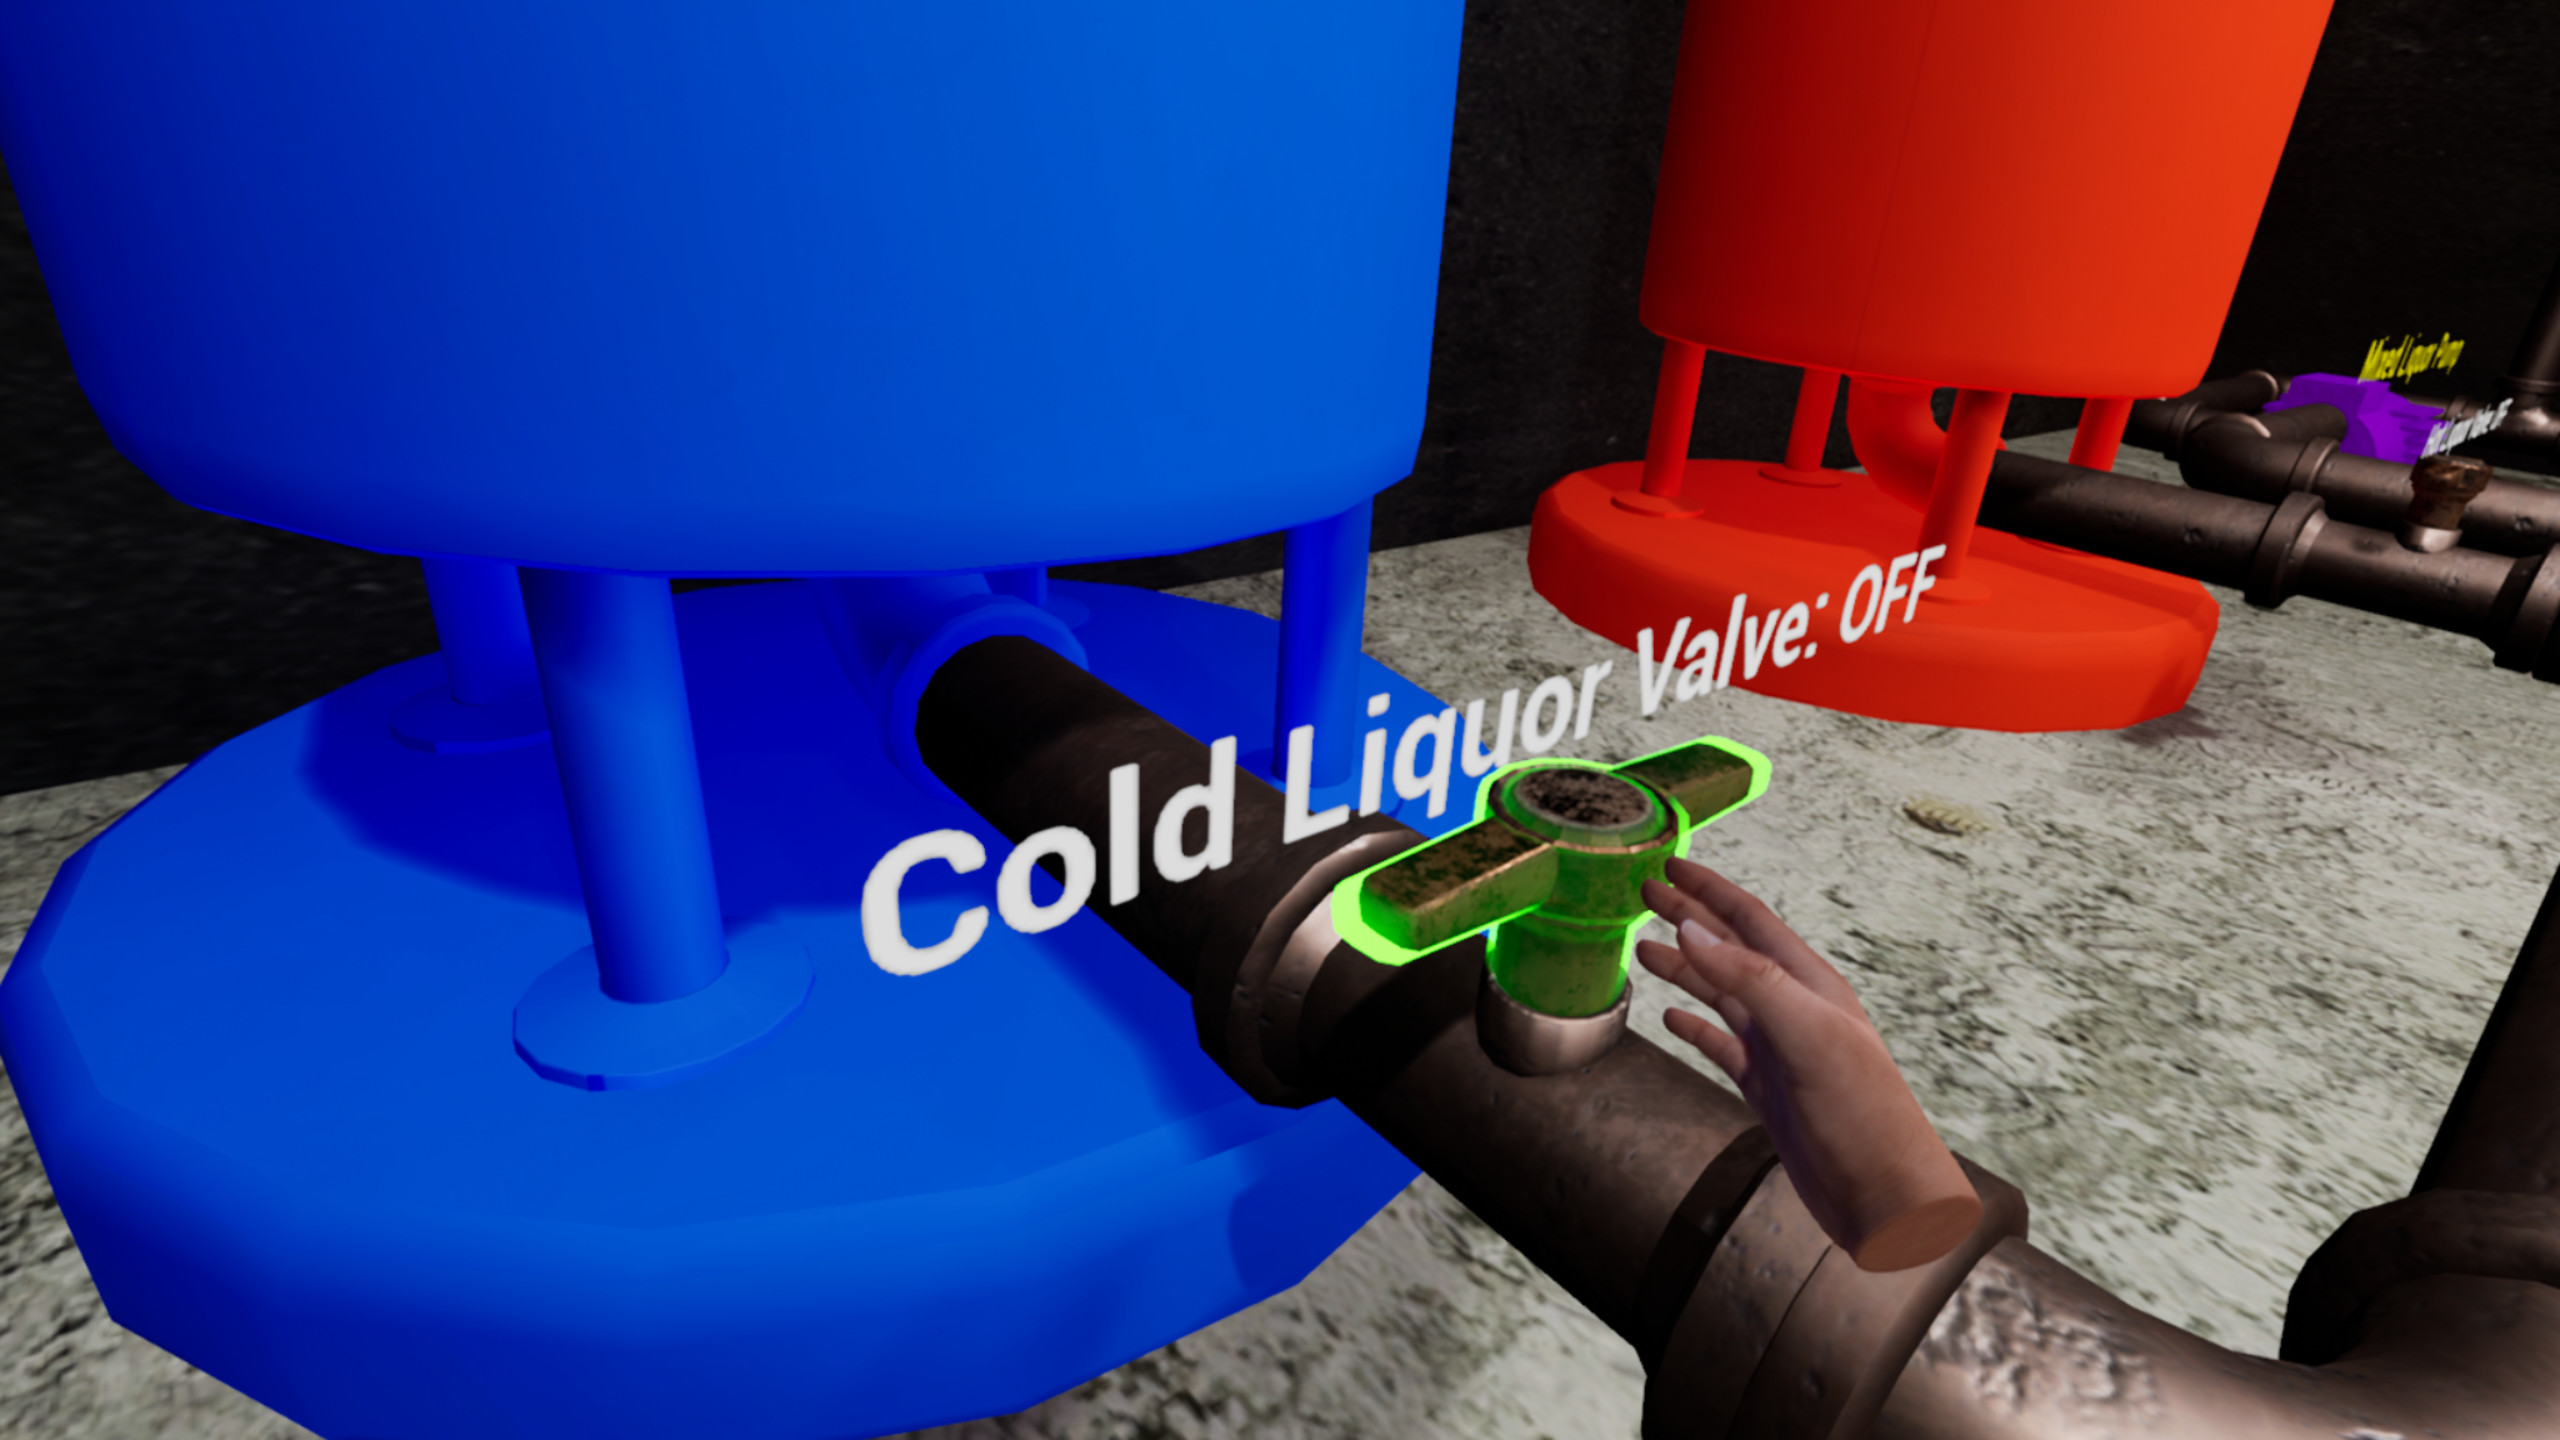 VR Brewing Simulator screenshot